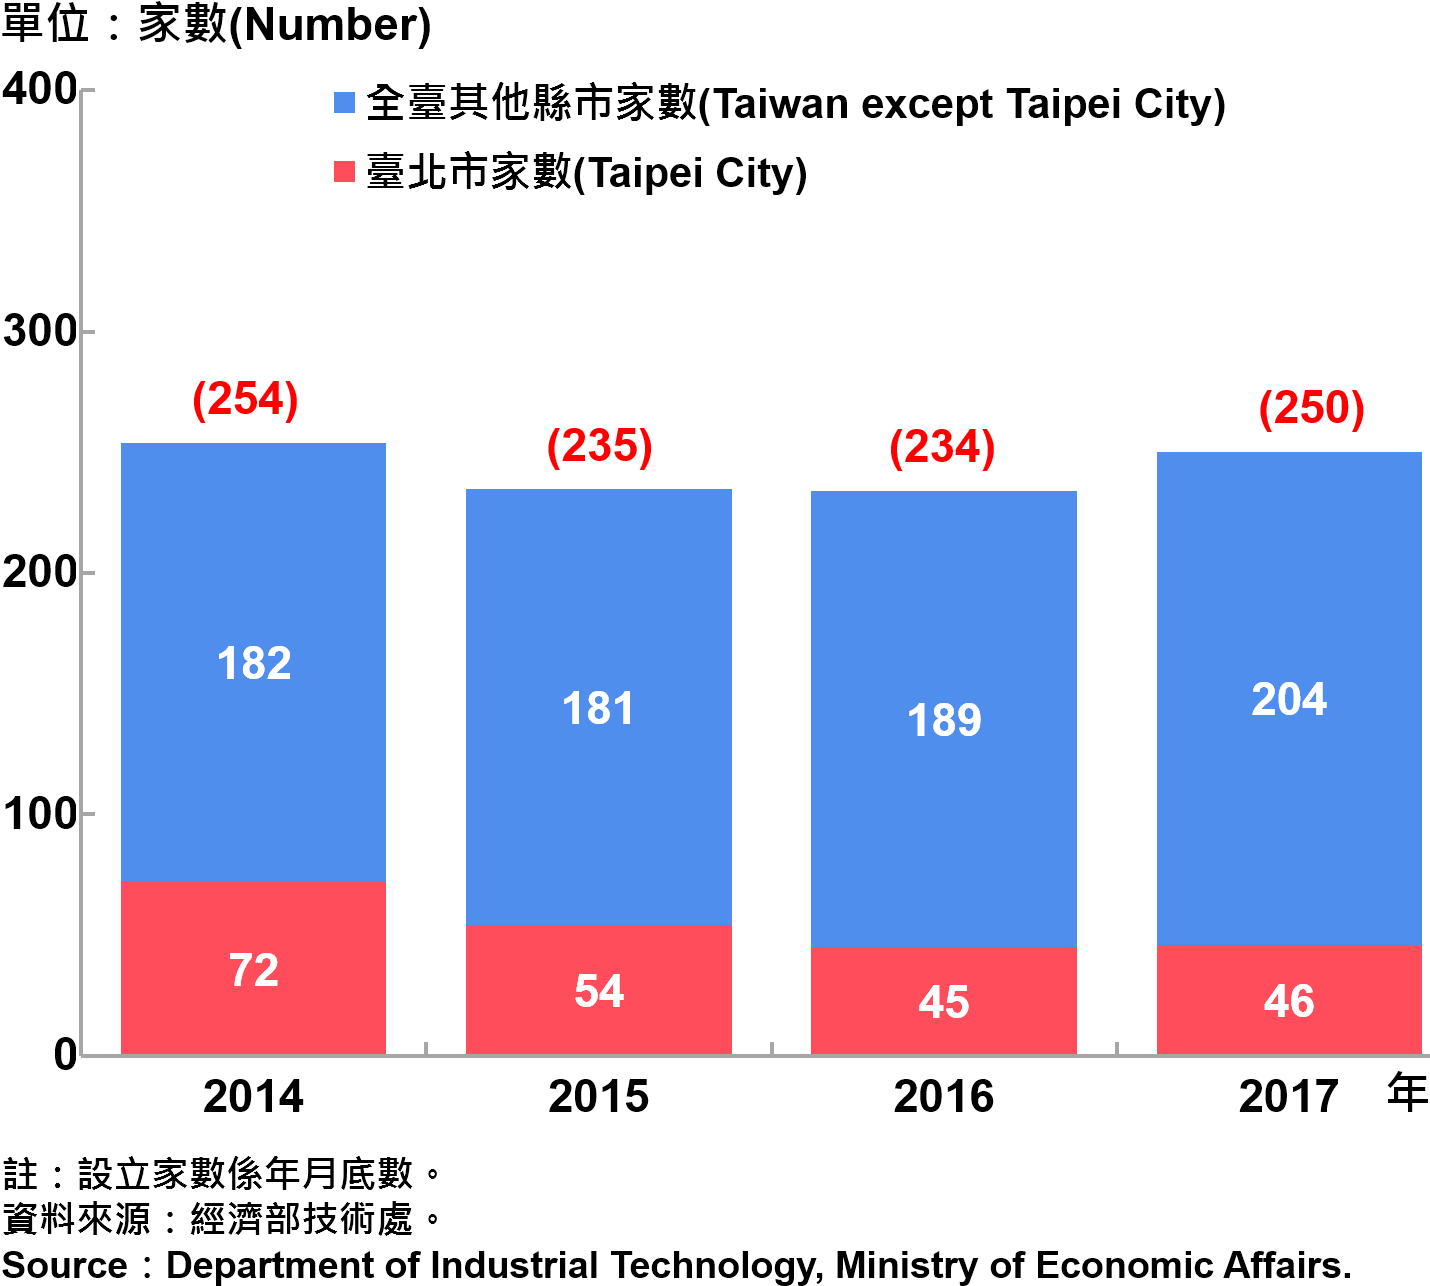 圖16、臺北市研發中心設立家數—2017 Number of R&D Centers in Taipei City—2017